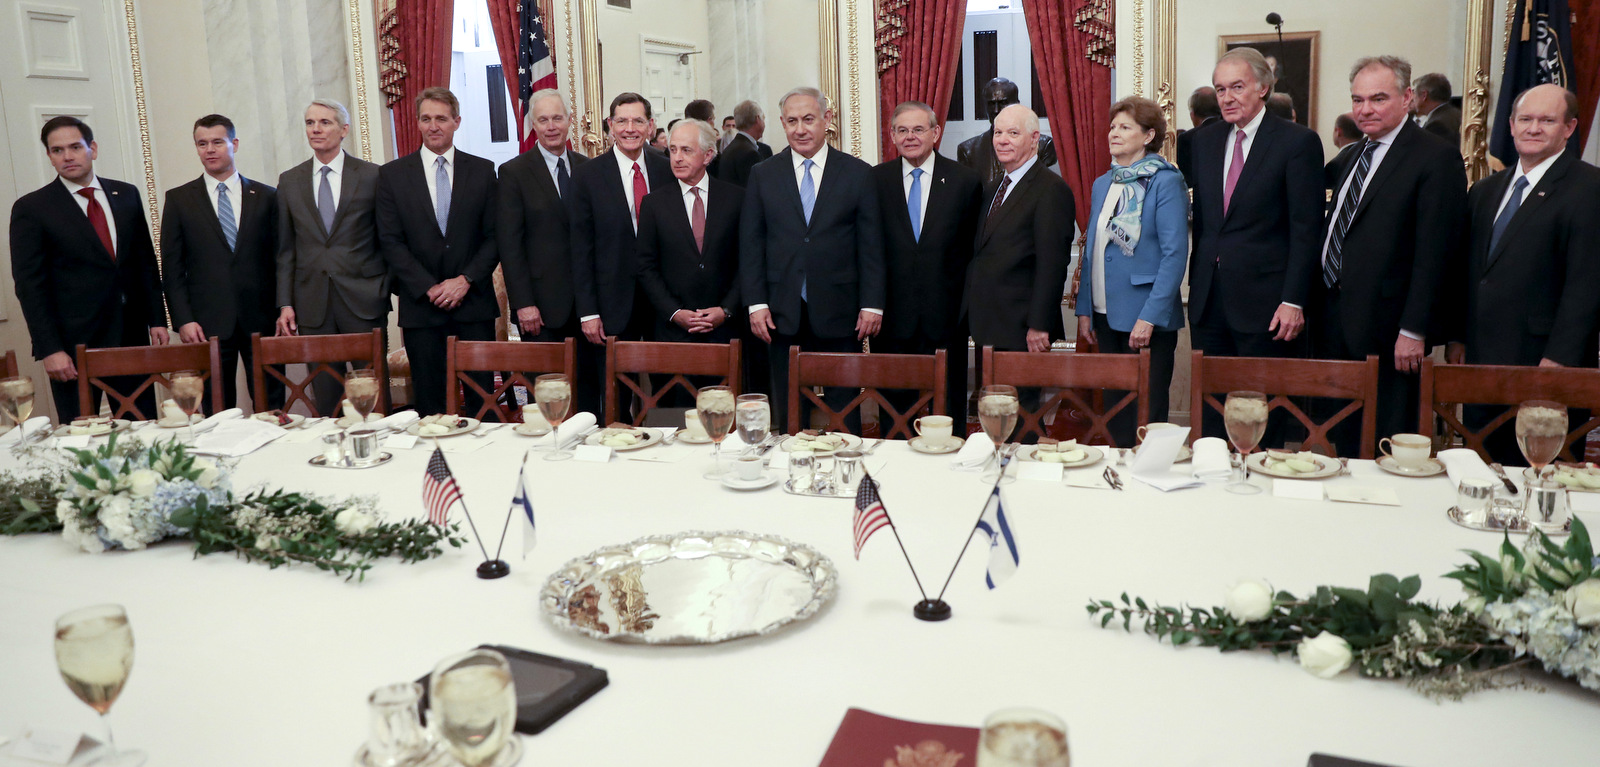 Israeli Prime Minister Benjamin Netanyahu, center, with members of the Senate Foreign Relations Committee before the start of their meeting on Capitol Hill in Washington, March 6, 2018. With Netanyahu, are from left, Sen. Marco Rubio, R-Fla., Sen. Tom Udall, D-N.M., Sen. Rob Portman, R-Ohio, Sen. Jeff Flake, R-Ariz., Sen. Ron Johnson, Sen. John Barrasso, R-Wyo., Chairman Sen. Bob Corker, R-Tenn., Ranking Member, Sen. Bob Menendez, D-N.J., Sen. Ben Cardin, D-Md., Sen. Jeanne Shaheen, D-N.H., Sen. Edward J. Markey, D-Mass., Sen. Tim Kaine, D-Va., and Sen. Chris Coons, D-Del. (AP/Pablo Martinez Monsivais)